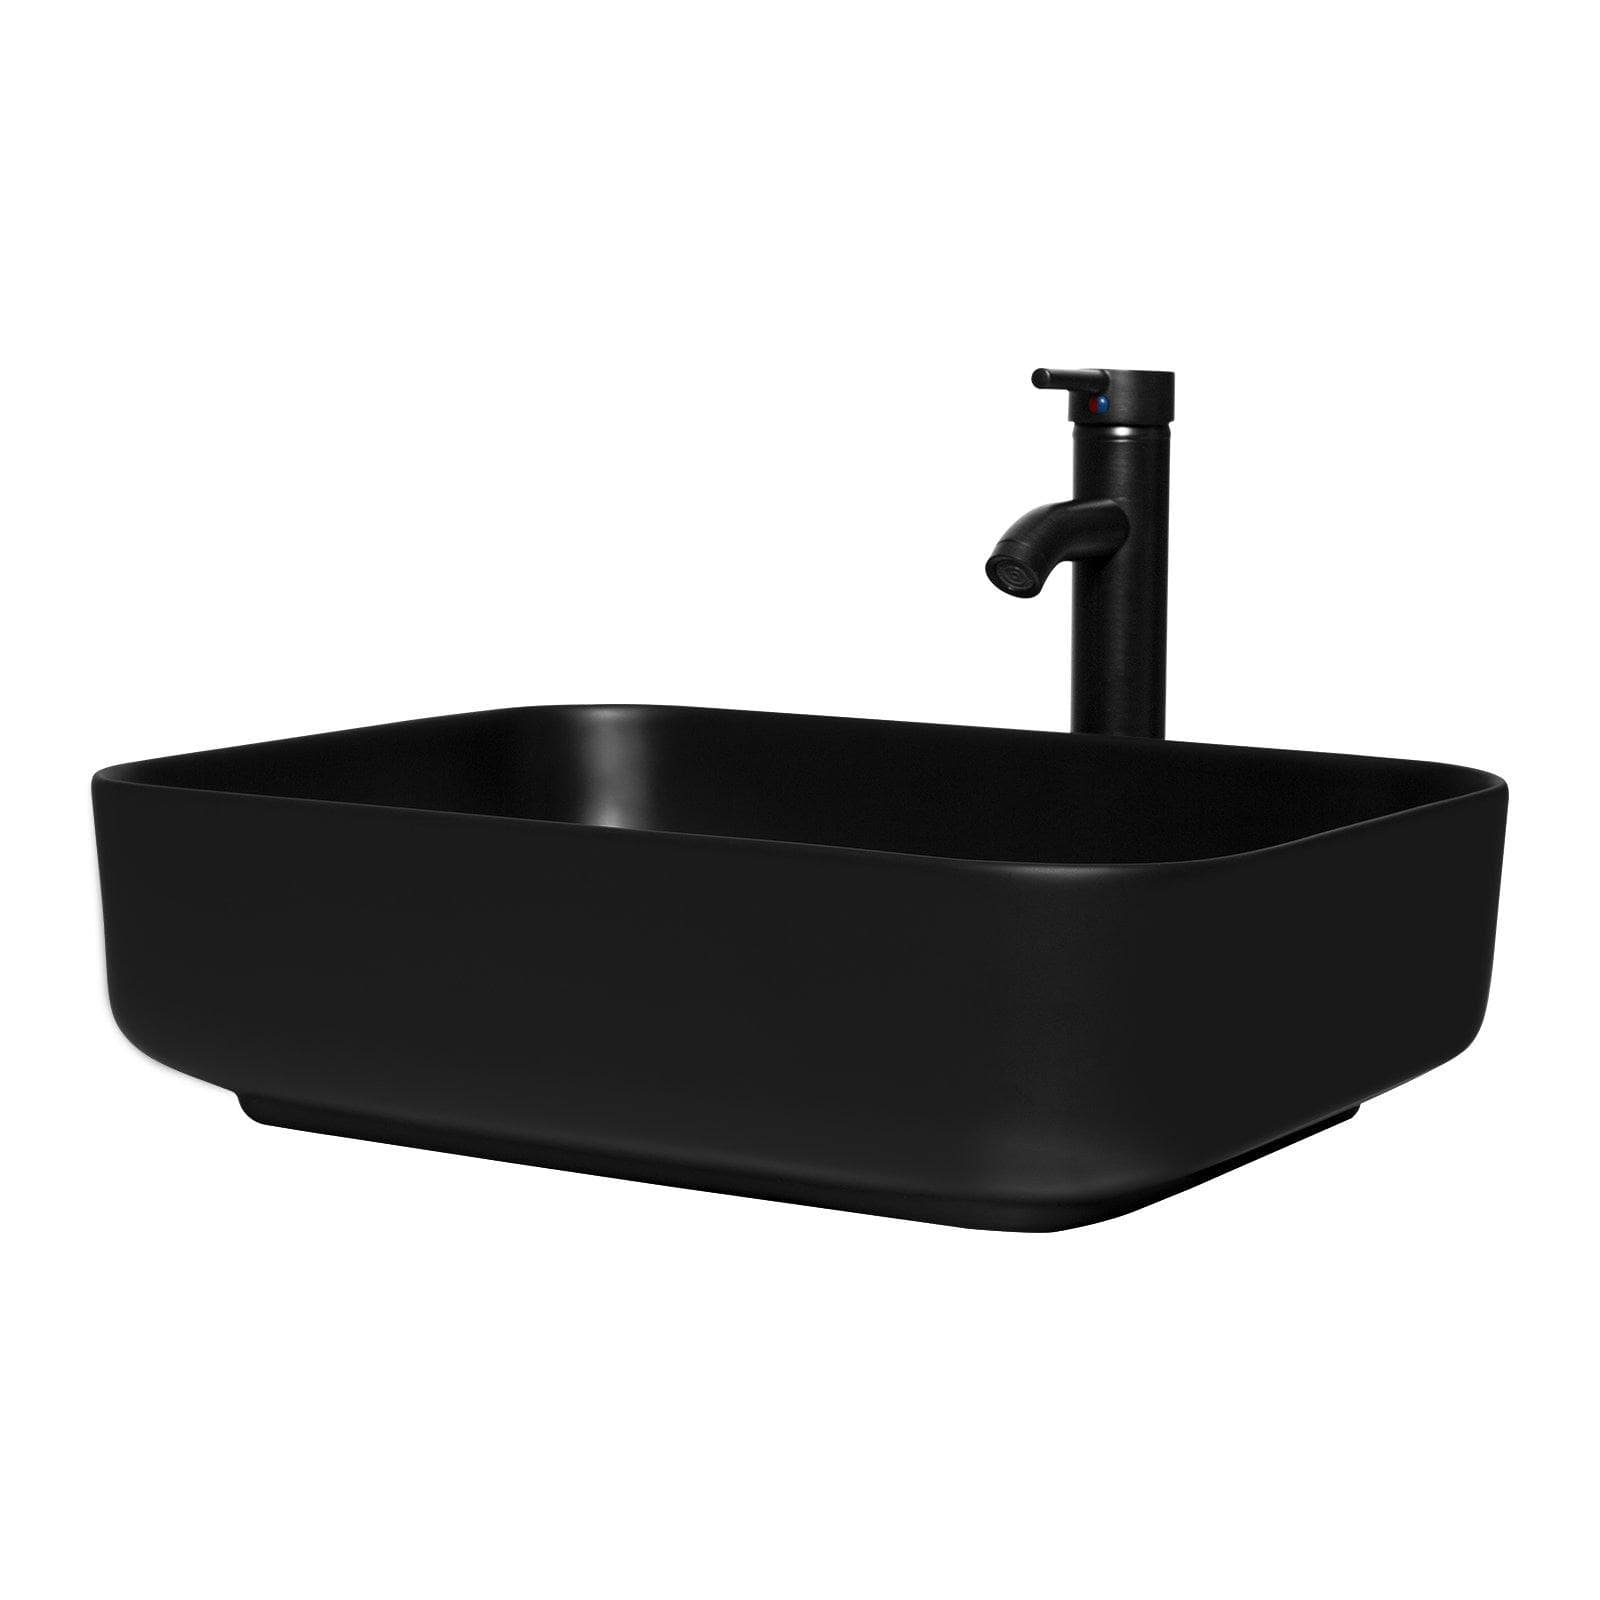 Elecwish Vessel Sinks Square Black Ceramic Bathroom Vessel Sink Faucet and Drain Combo,Rectangle Black